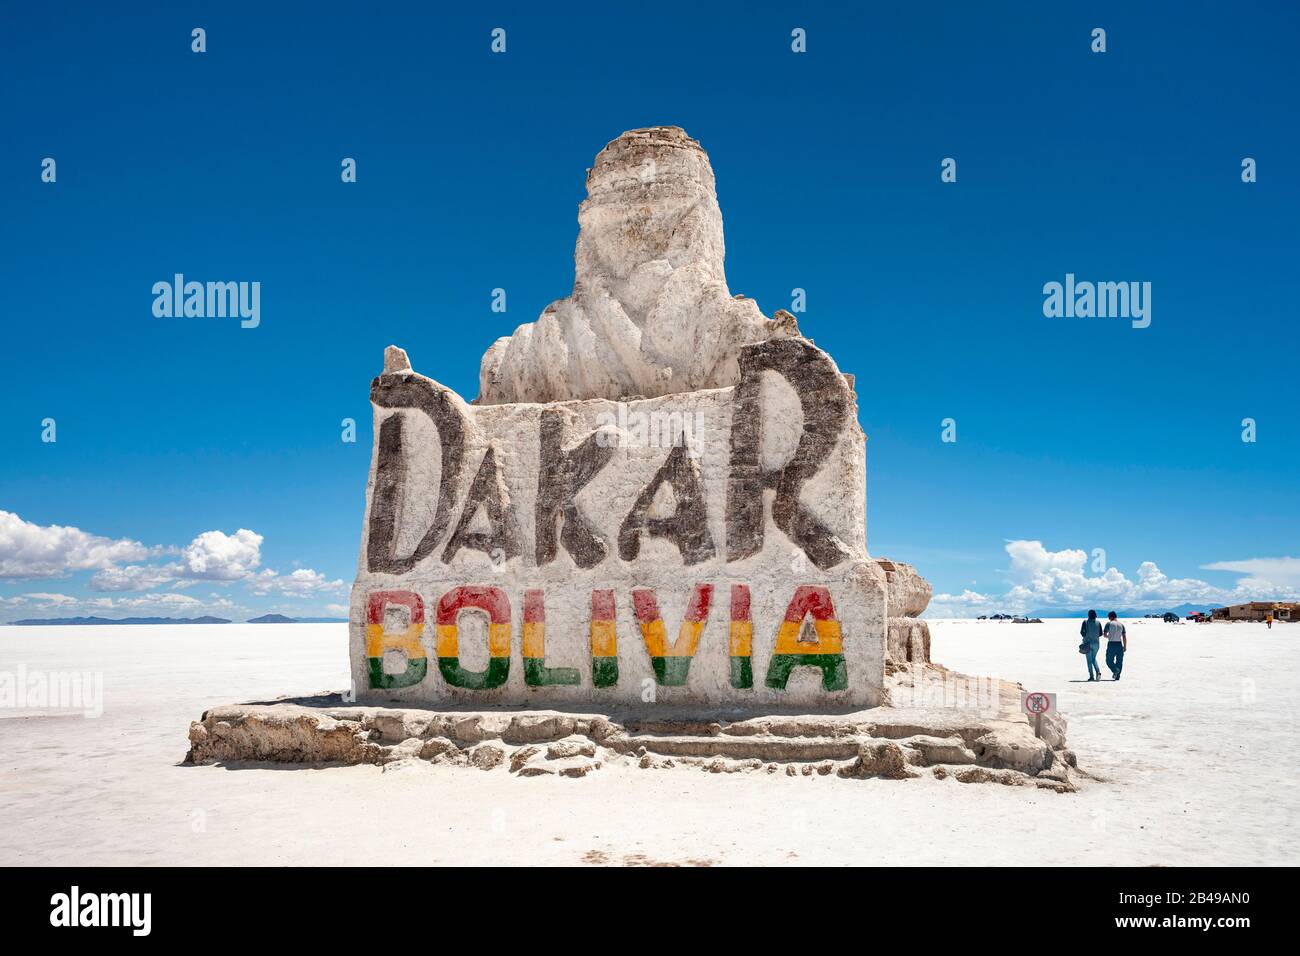 The Dakar monument on the Salar de Uyuni salt flats in Bolivia. Stock Photo